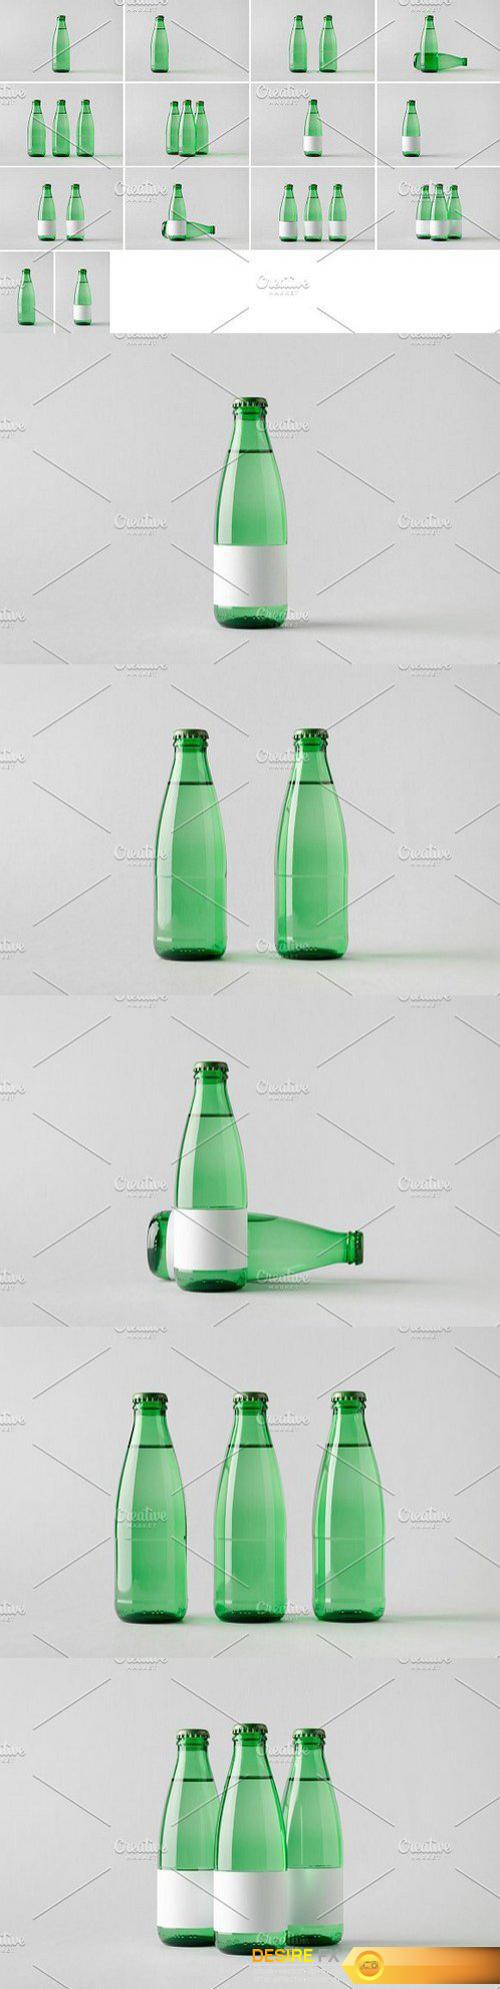 CM - Water Bottle Mock-Up Photo Bundle 4 1329023